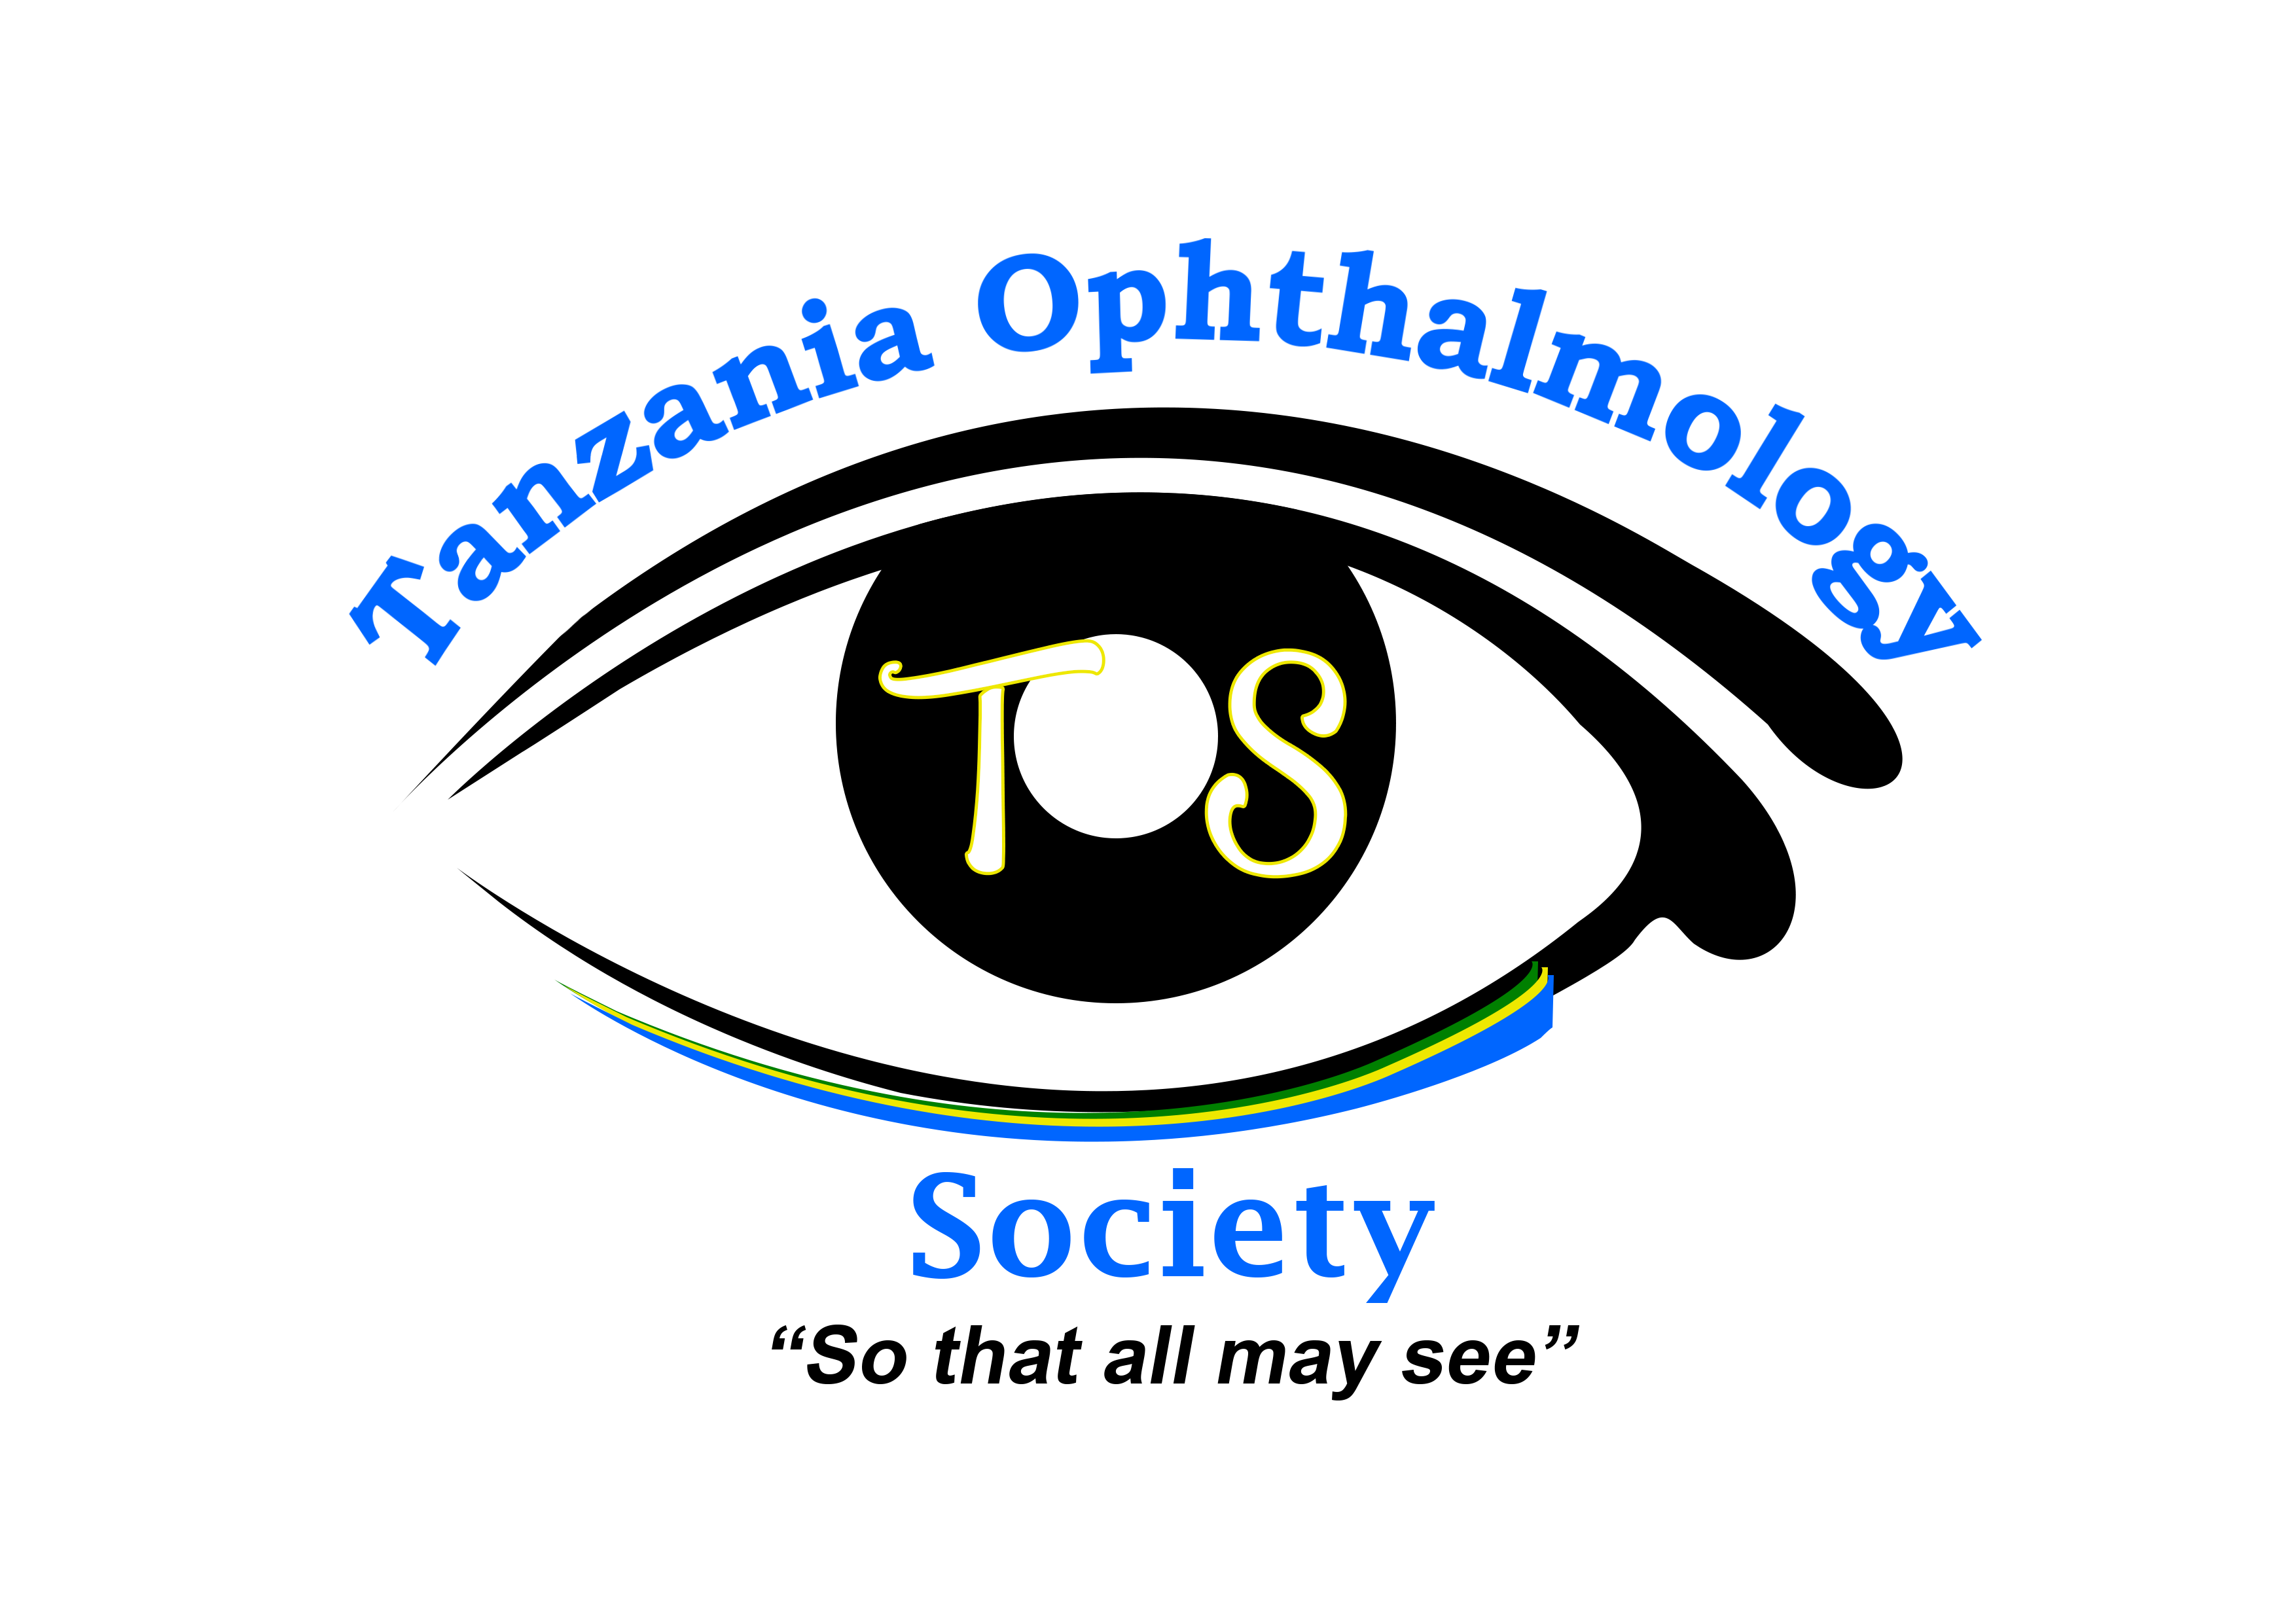 Tanzania Ophthalmology Society